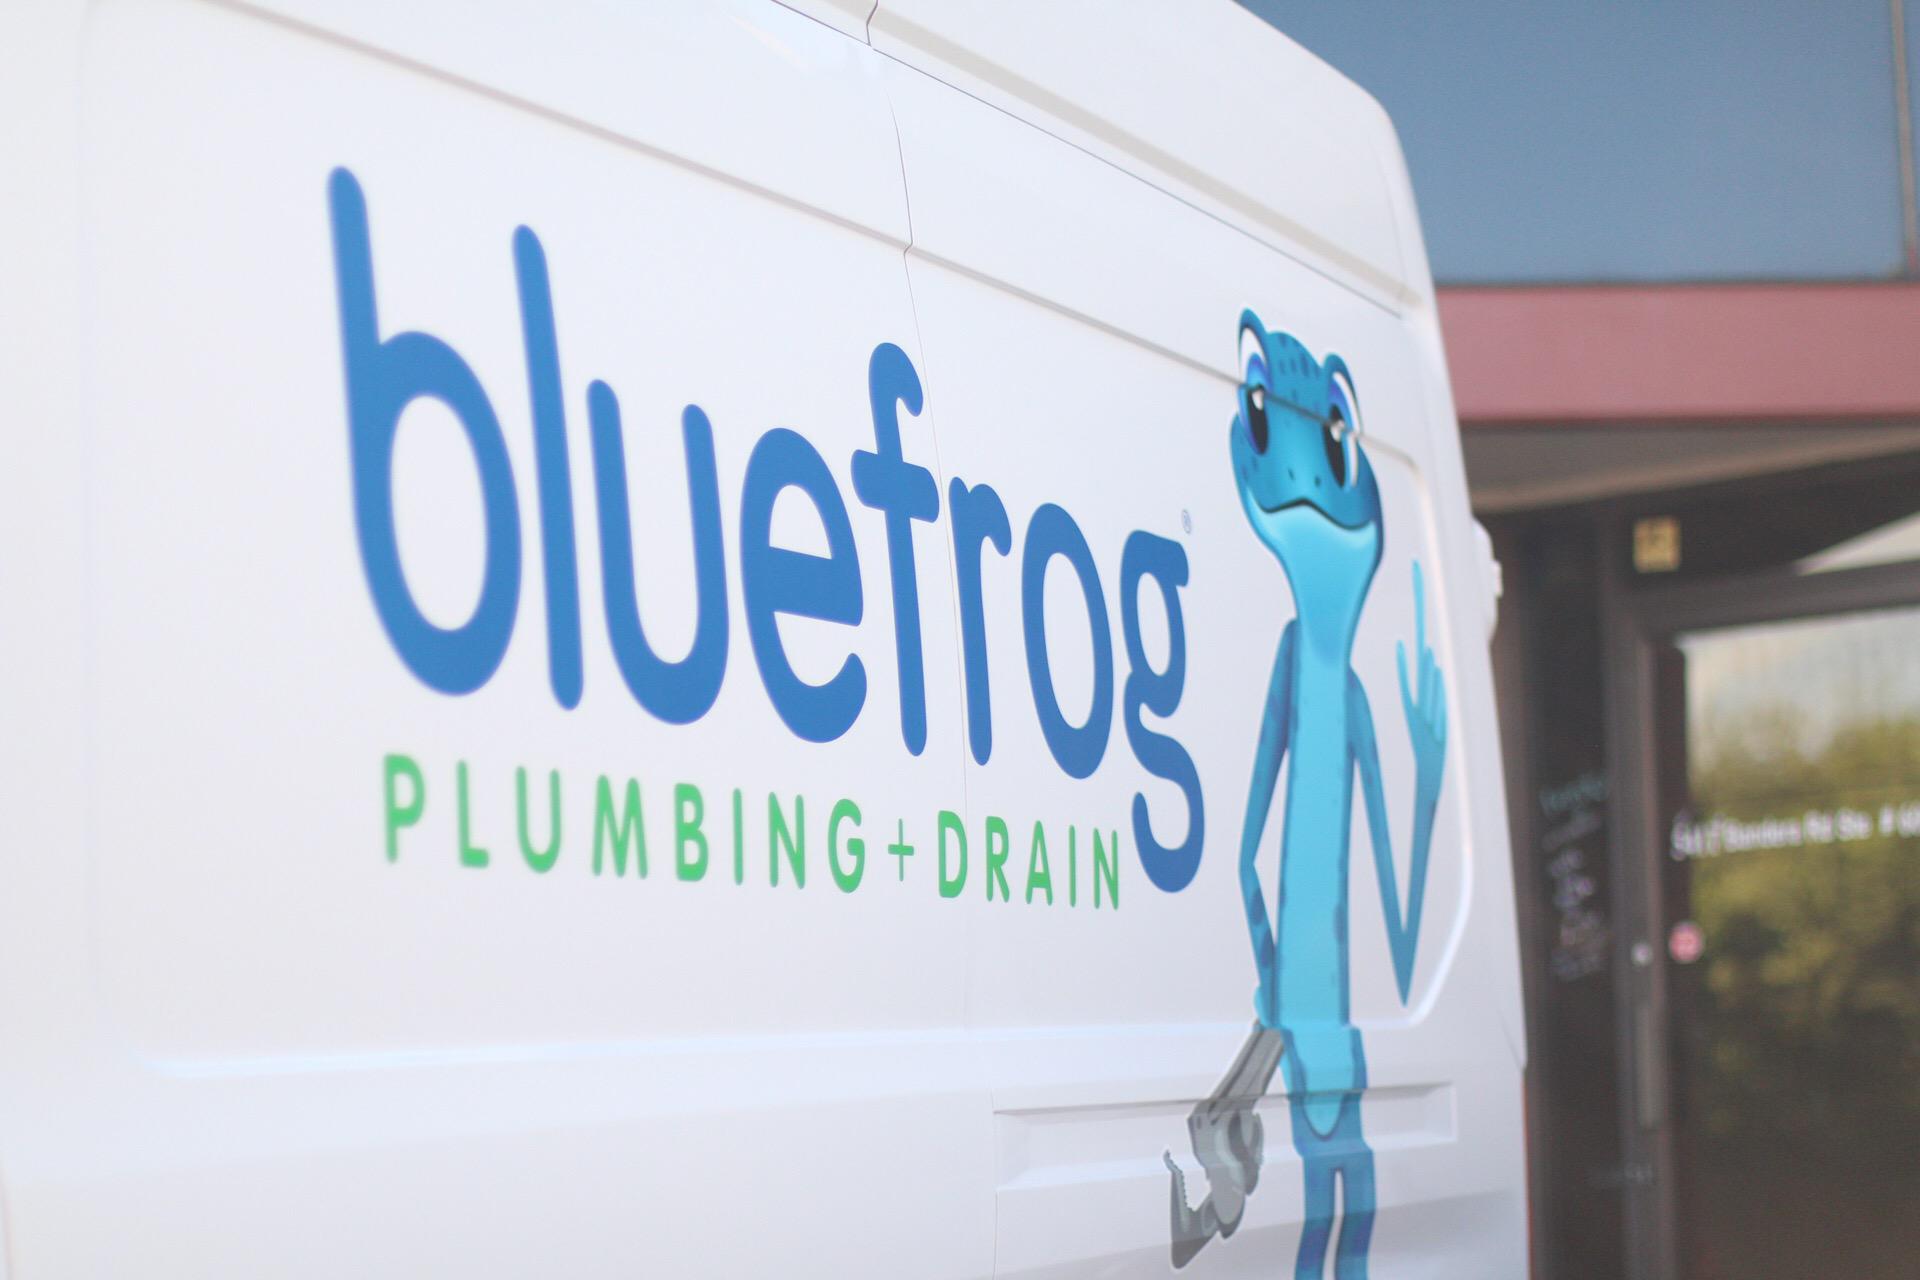 The bluefrog Plumbing + Drain logo on one of the plumbing service fleet vehicles.